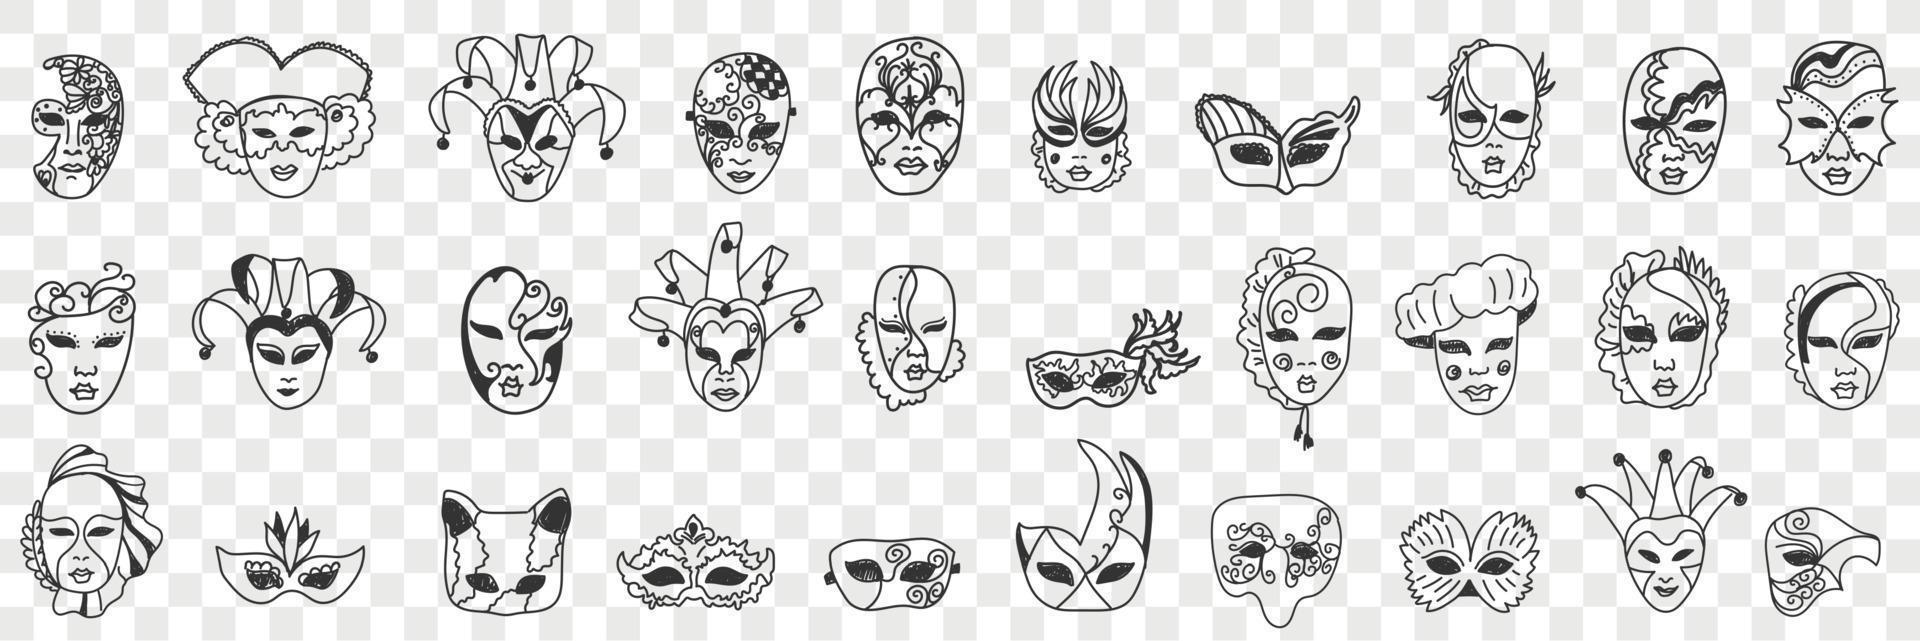 karneval masker sortiment klotter uppsättning. samling av hand dragen olika stilar av dekorativ ansikte masker som festival karneval kostymer isolerat på transparent bakgrund vektor illustration